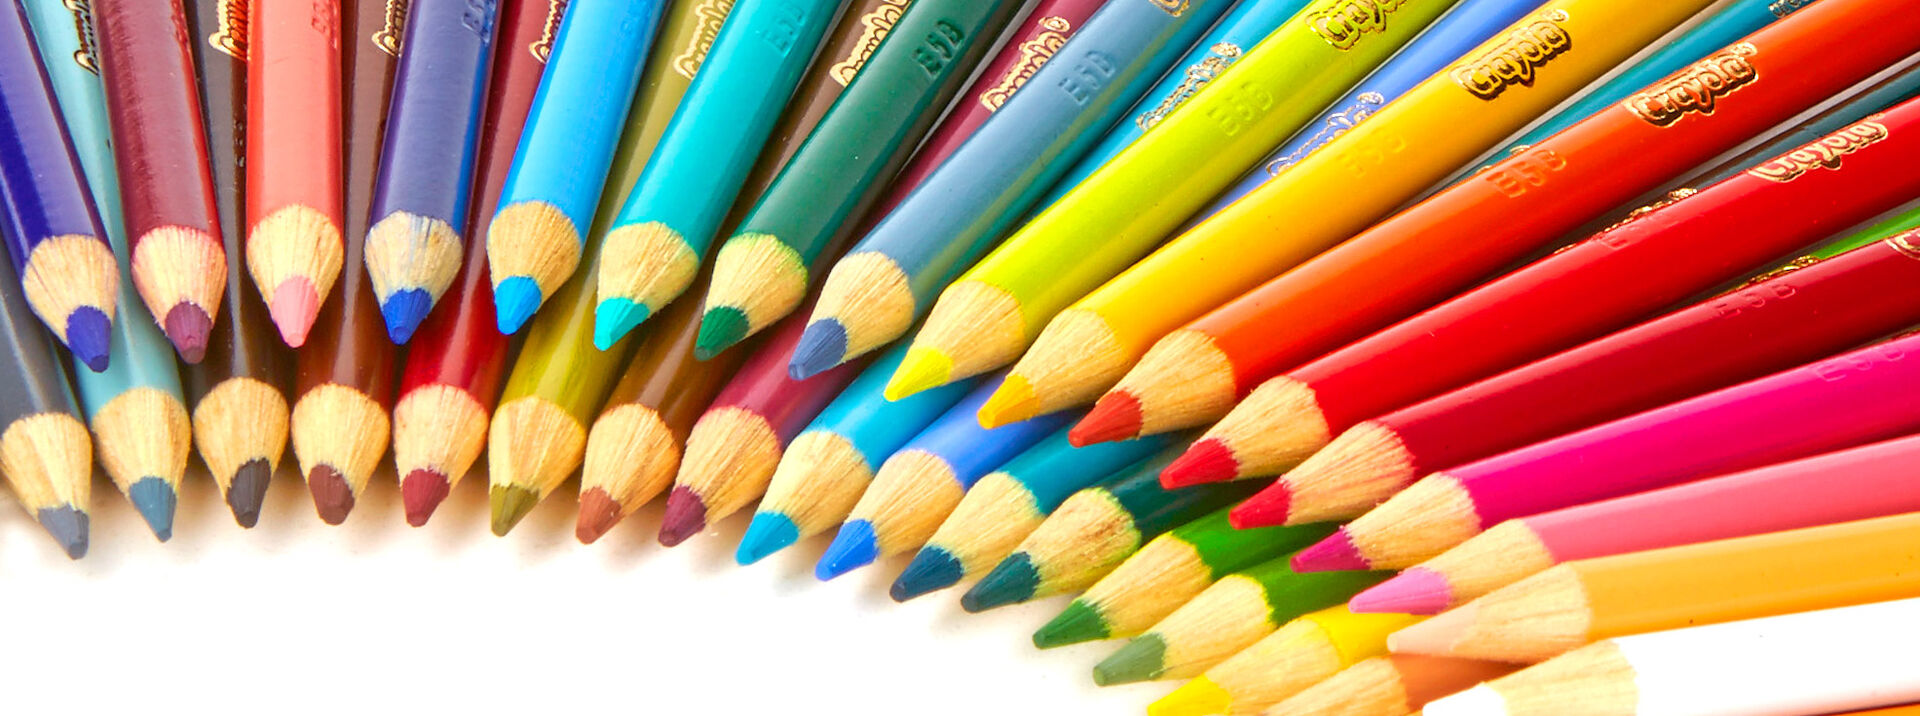 Crayola Colored Pencils Shop Colored Pencils Crayola Coloring Wallpapers Download Free Images Wallpaper [coloring654.blogspot.com]